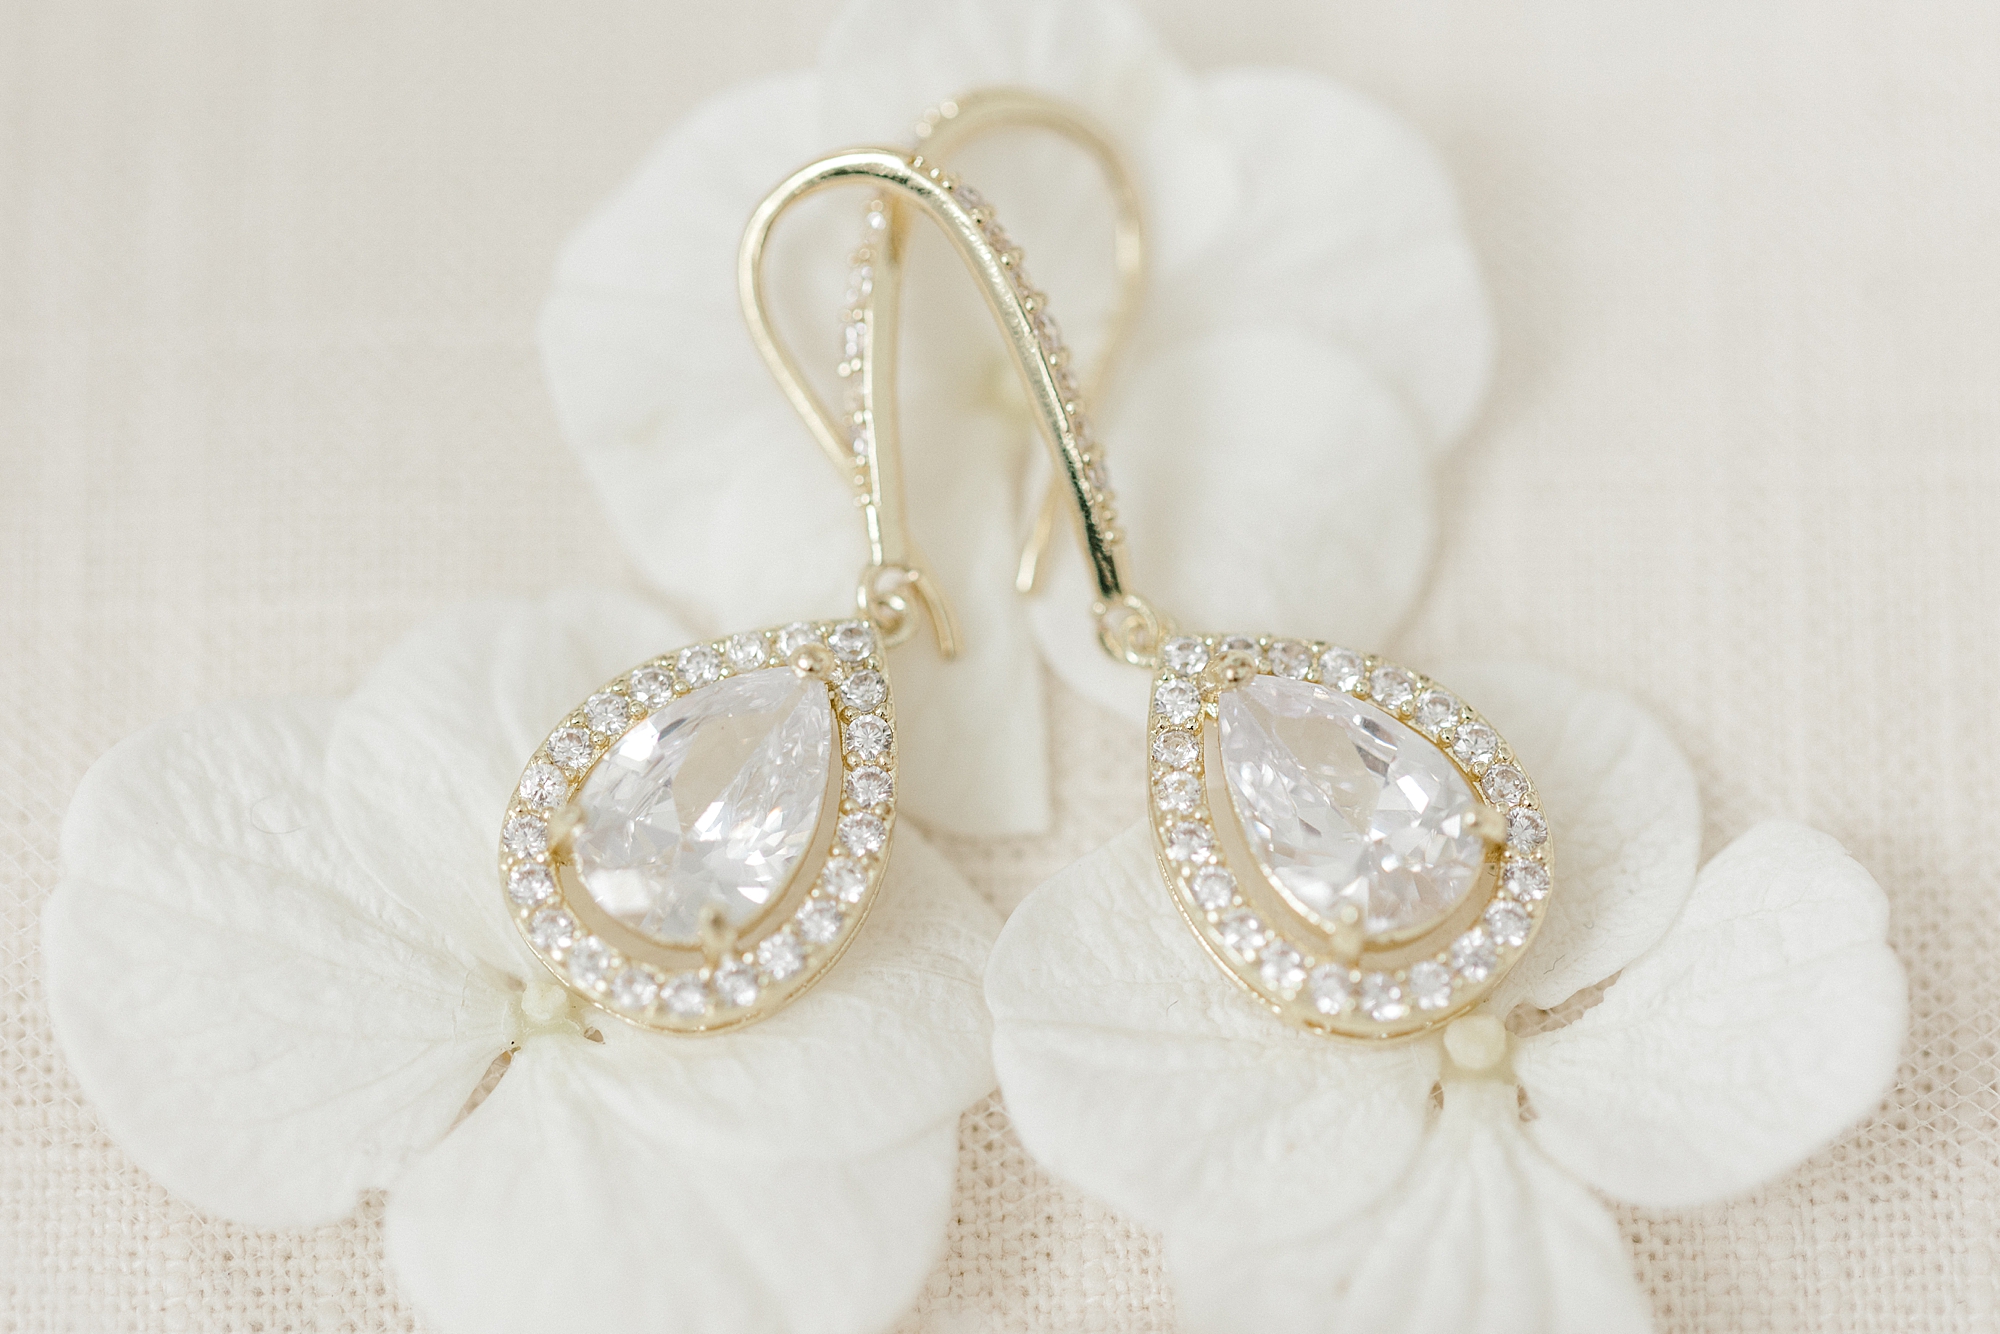 diamond earrings in gold setting lay on white flowers